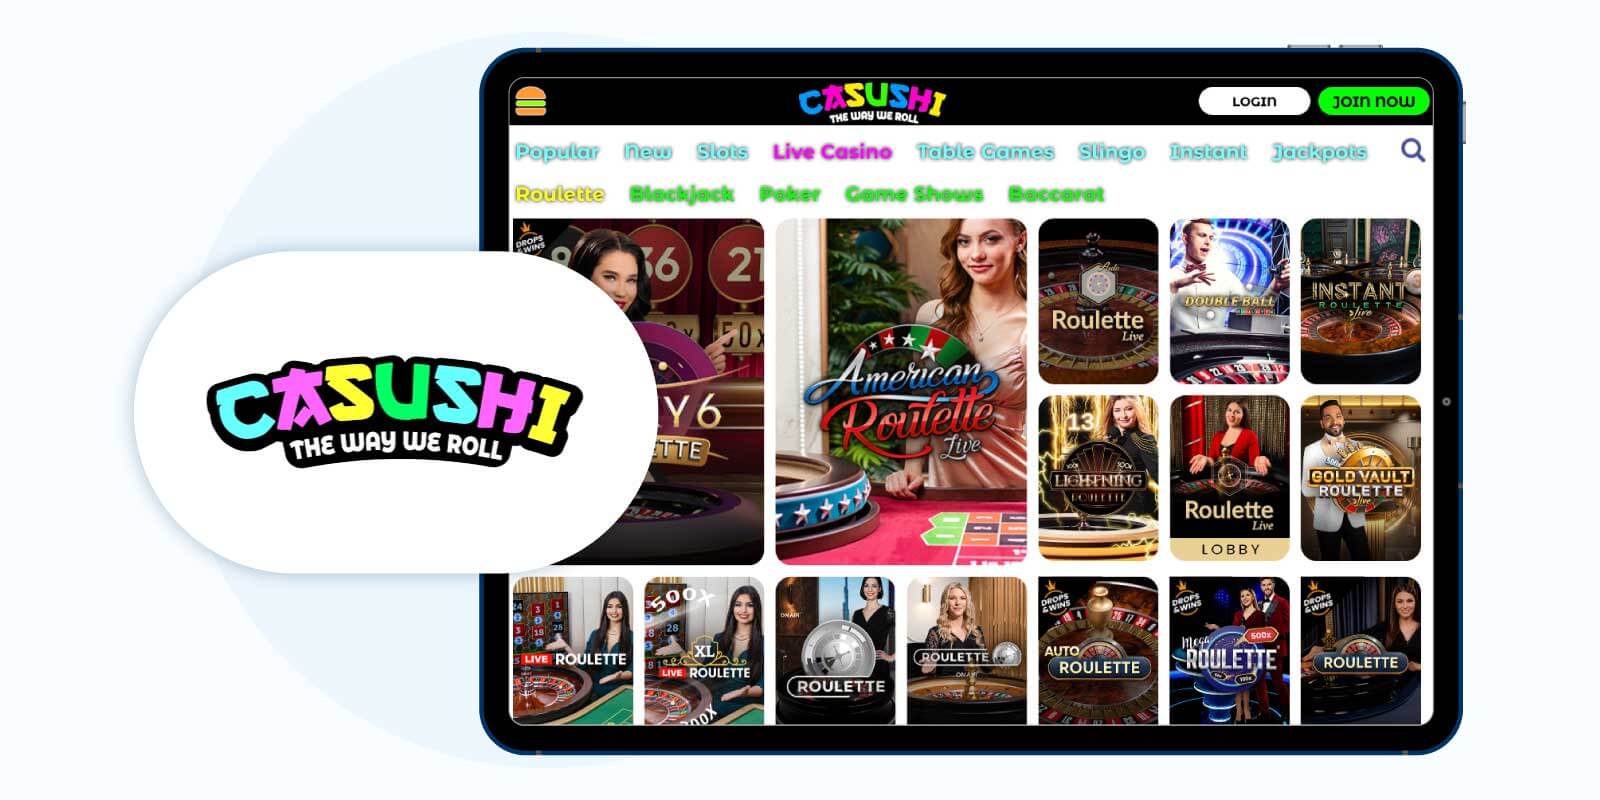 Casushi - Top Payforit Casino For Live Dealer Games